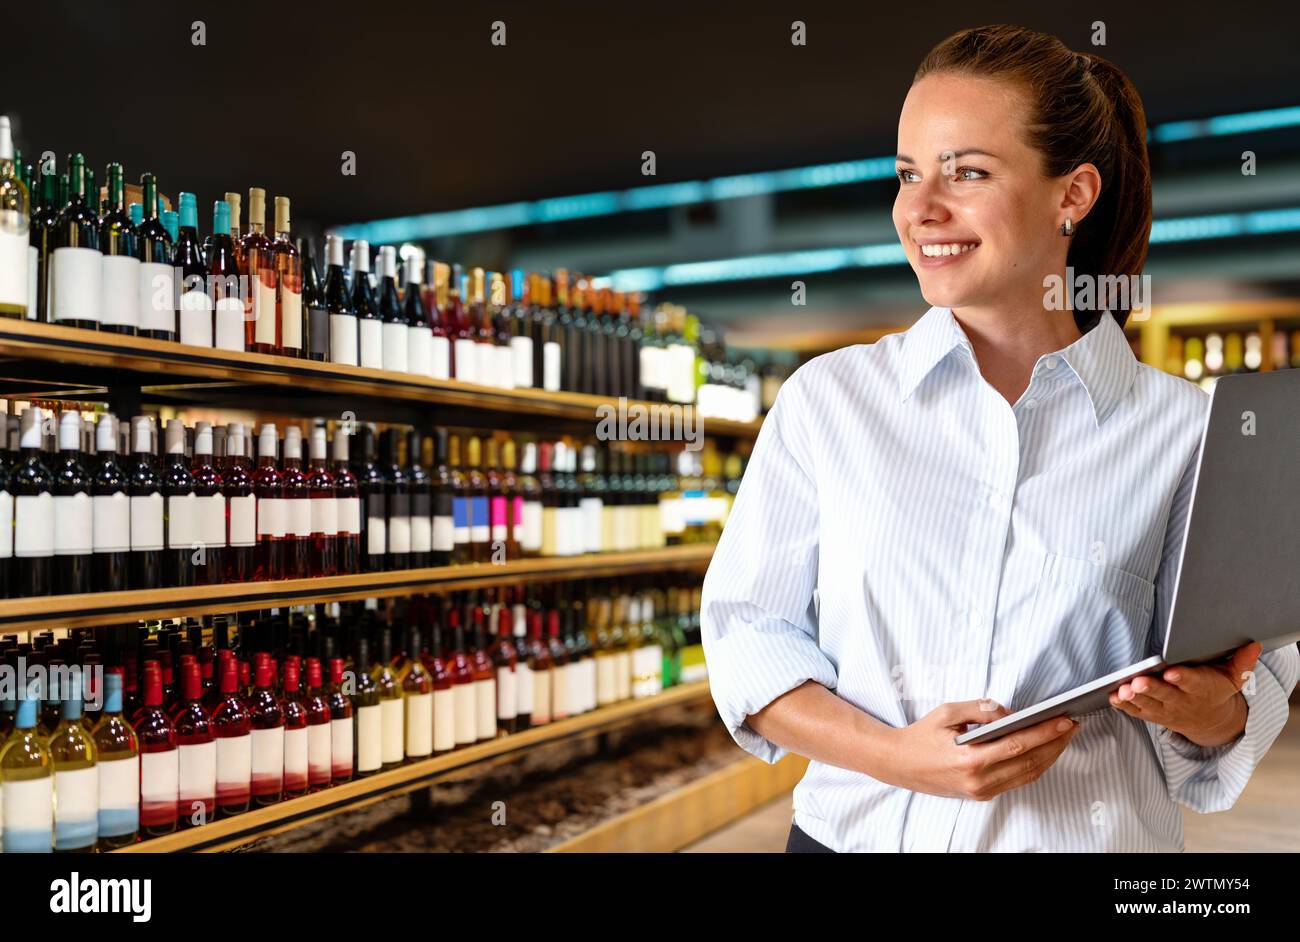 Pretty businesswoman with laptop in her hands stands in liquor store salesfloor. Stock Photo